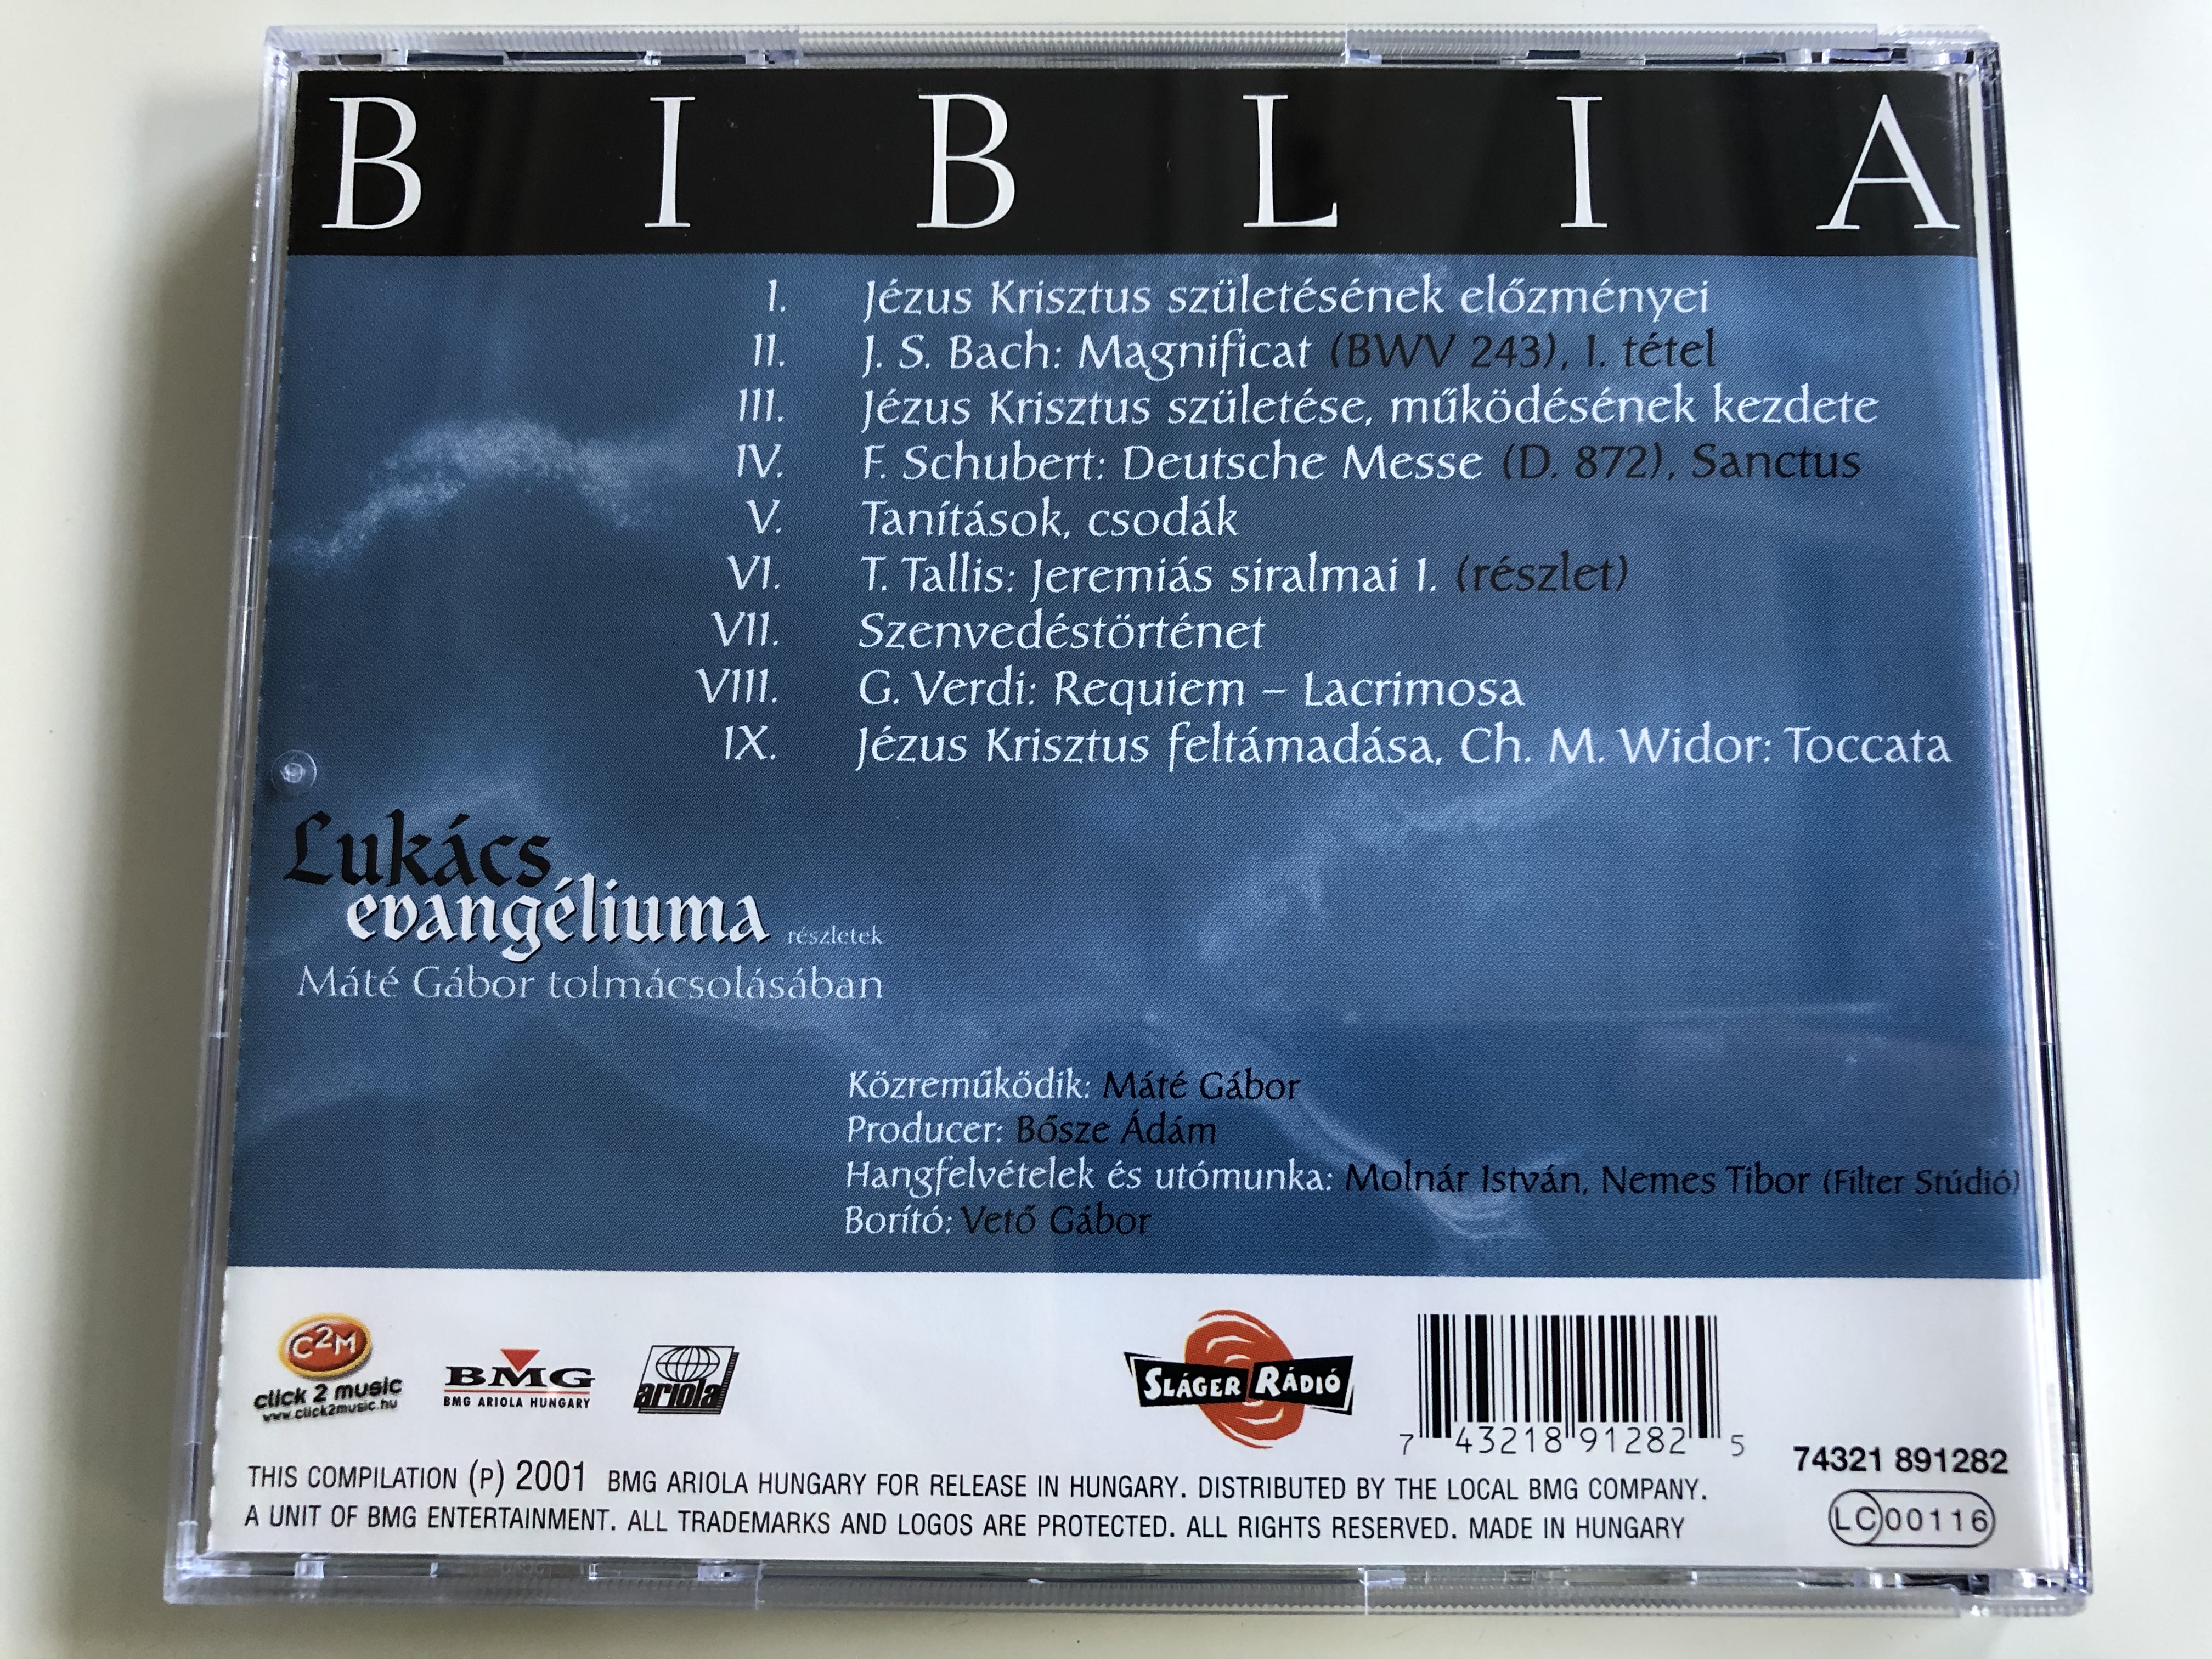 biblia-lukacs-evangeliuma-reszletek-mate-gabor-tolmacsolasaban-bmg-audio-cd-2001-74321-891282-5-.jpg